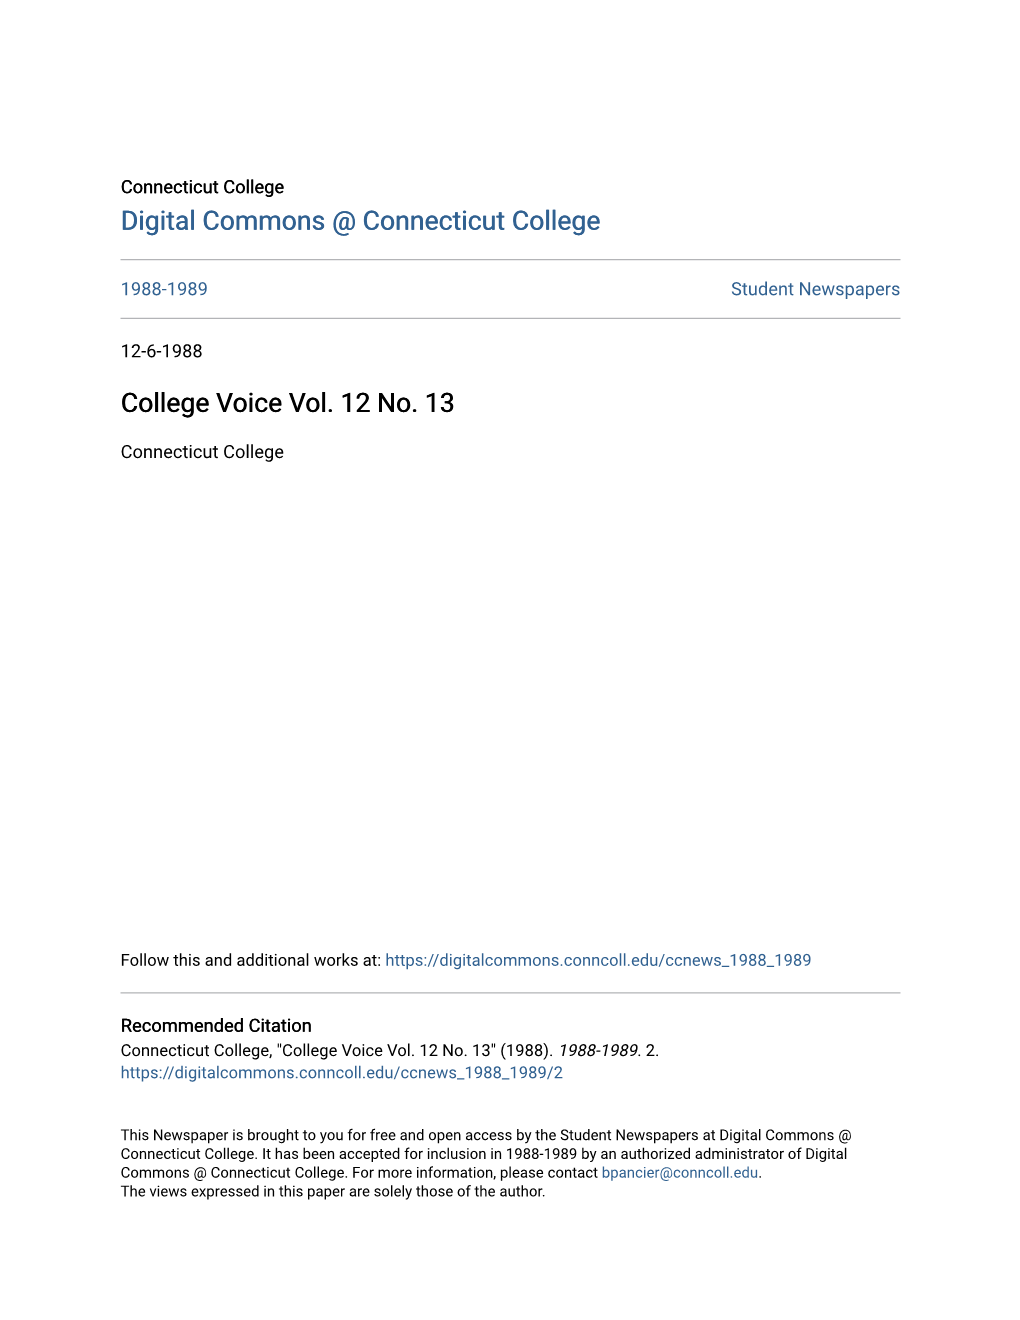 College Voice Vol. 12 No. 13